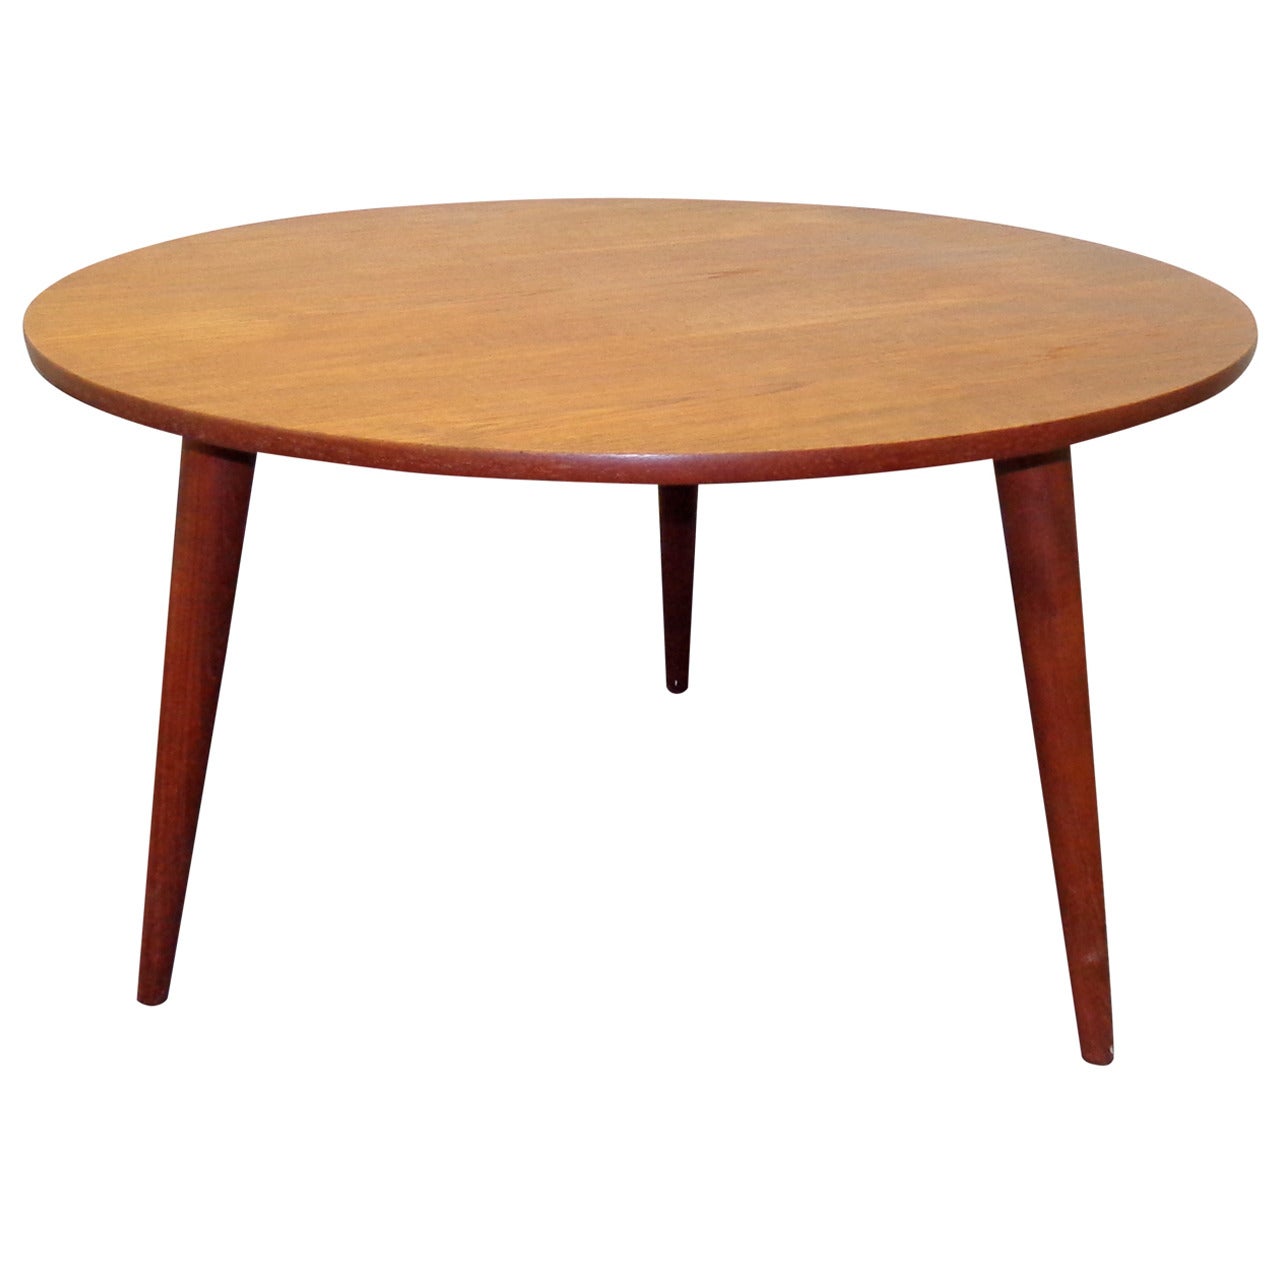 Hans J. Wegner Circular Teak Coffee Table with Three Tapered Legs For Sale